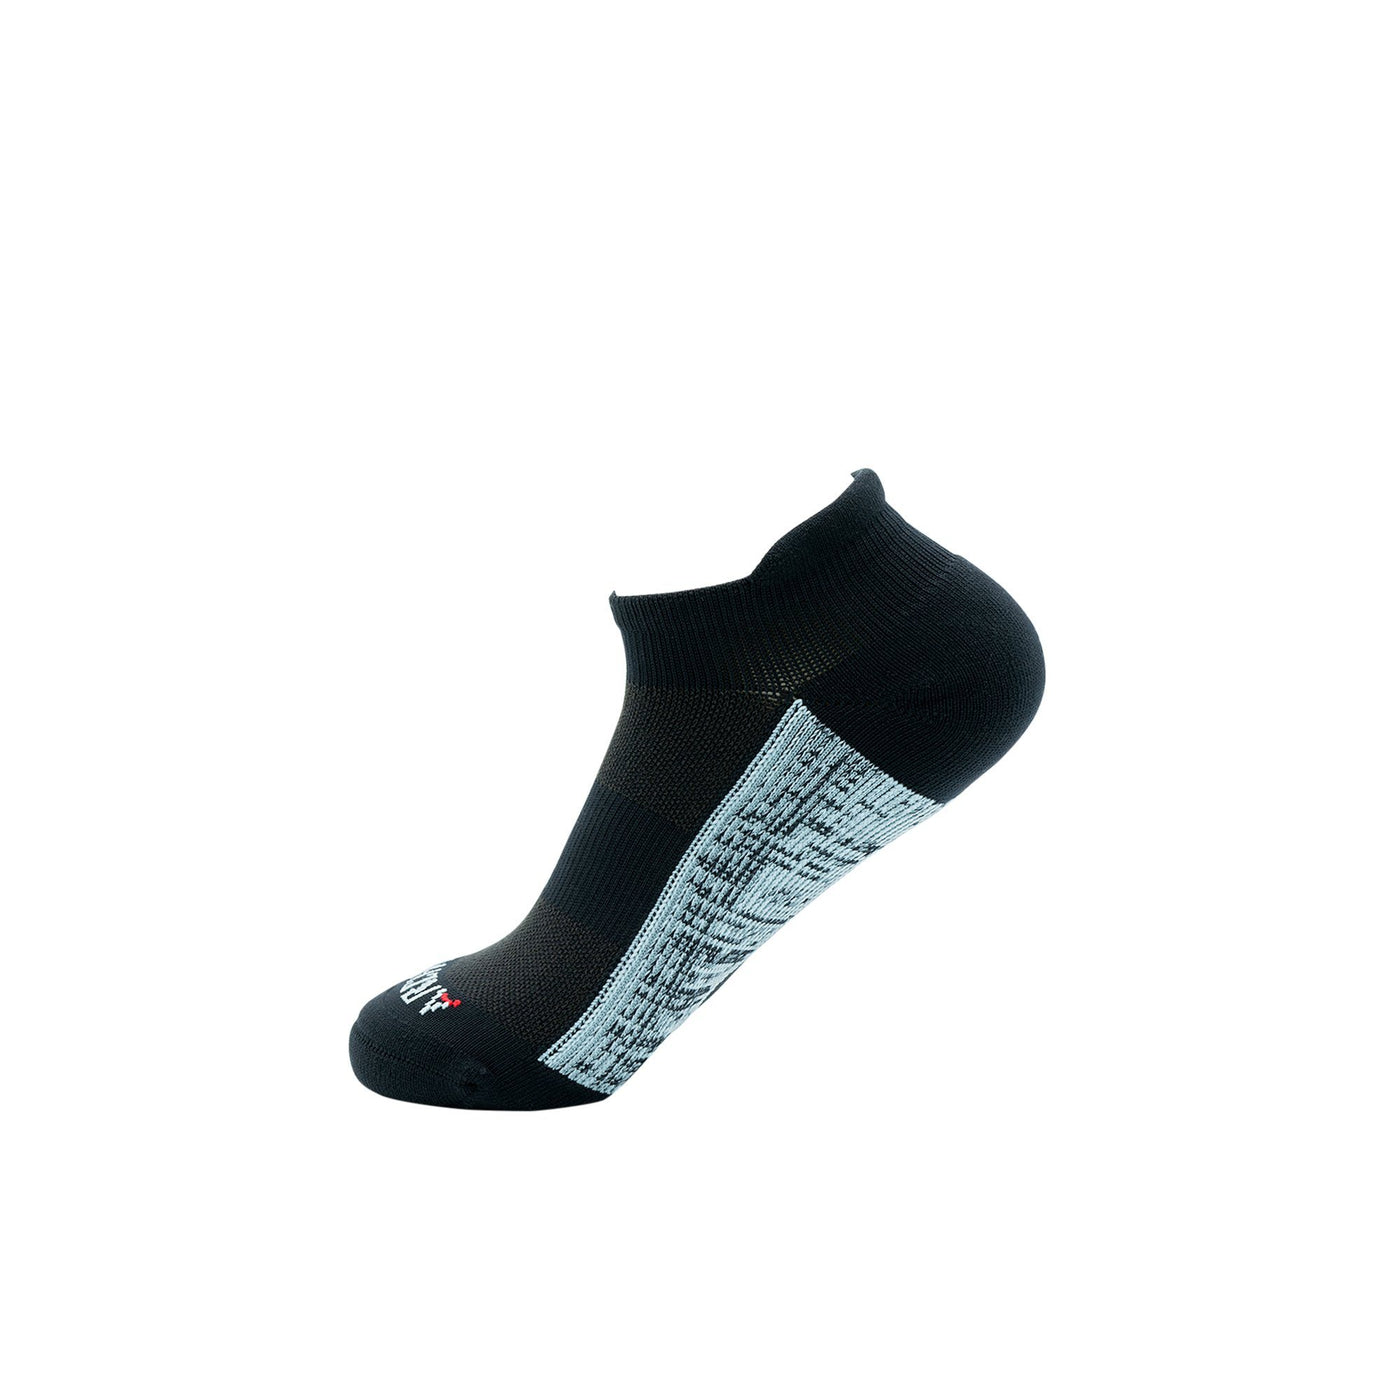 Athletic Ankle Sock 3-Pack in Black athletic socks ArchTek